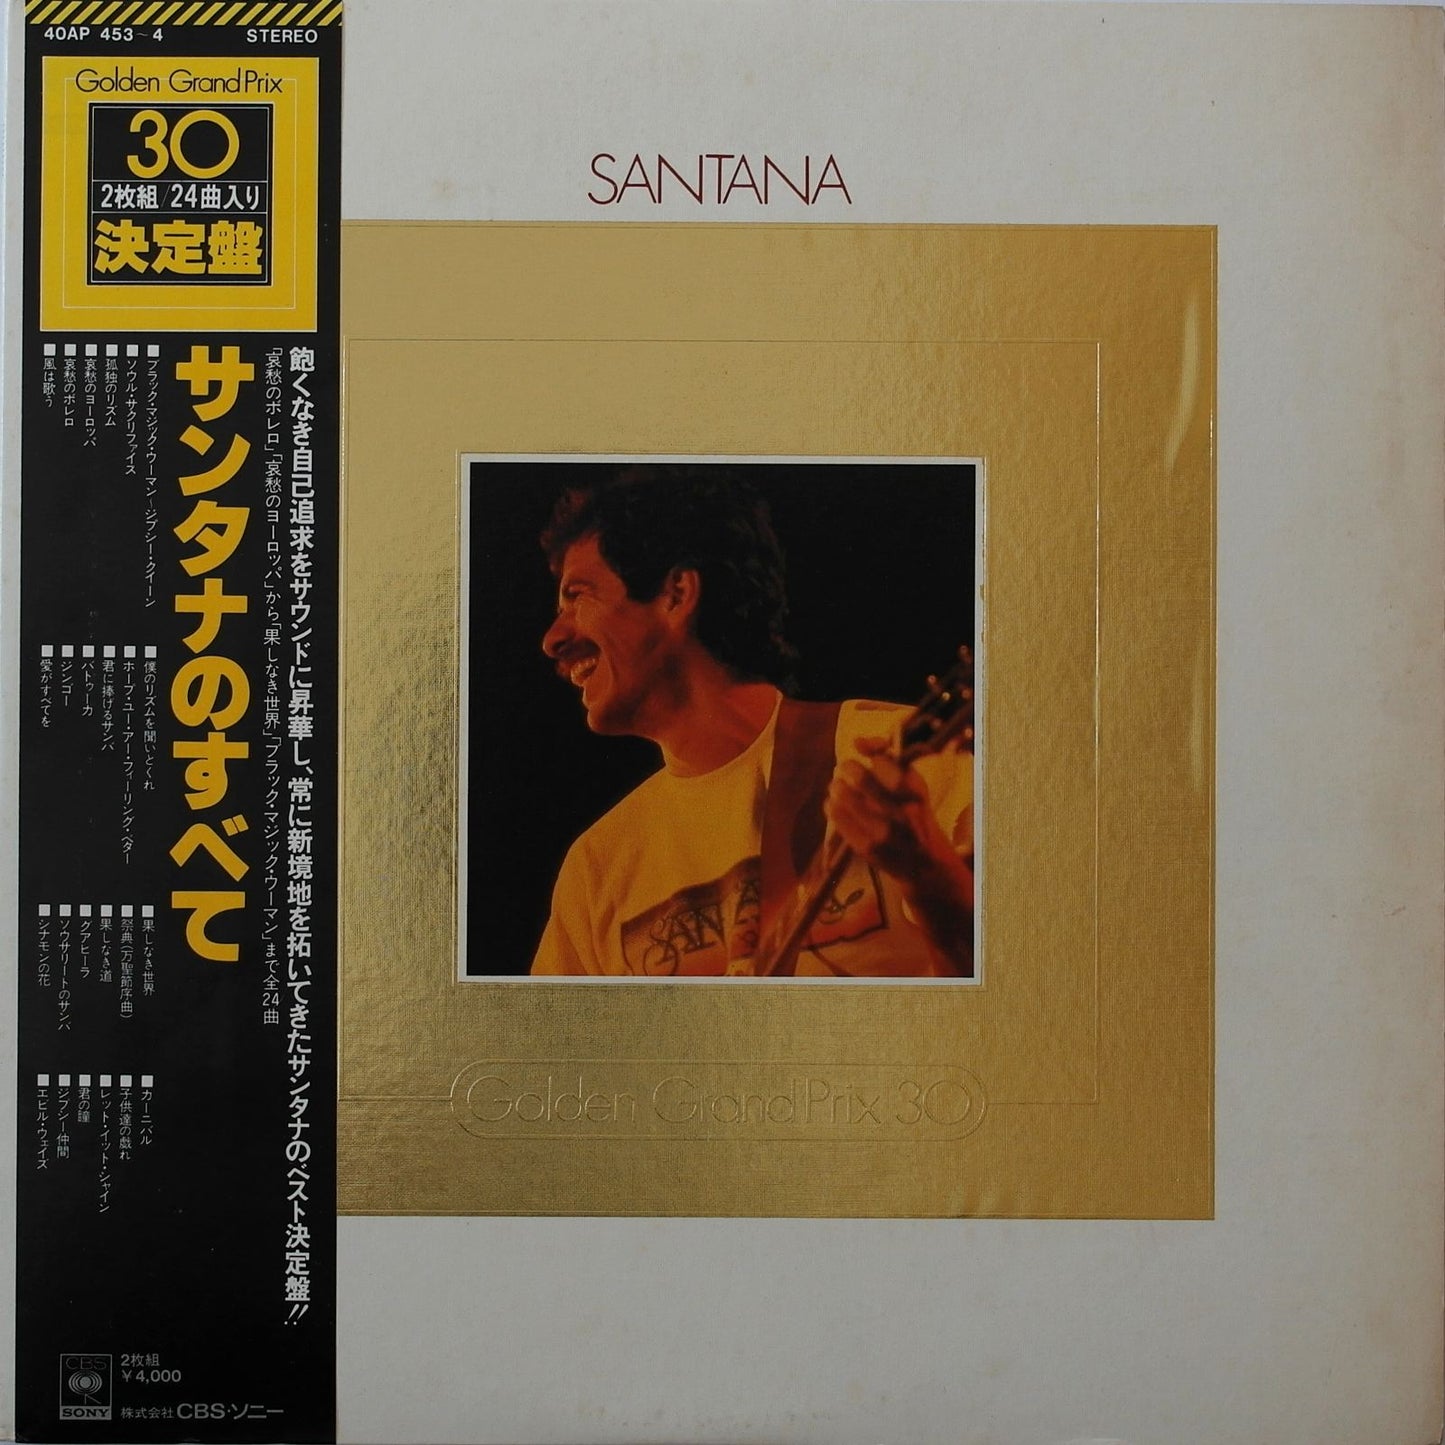 SANTANA - Golden Grand Prix 30